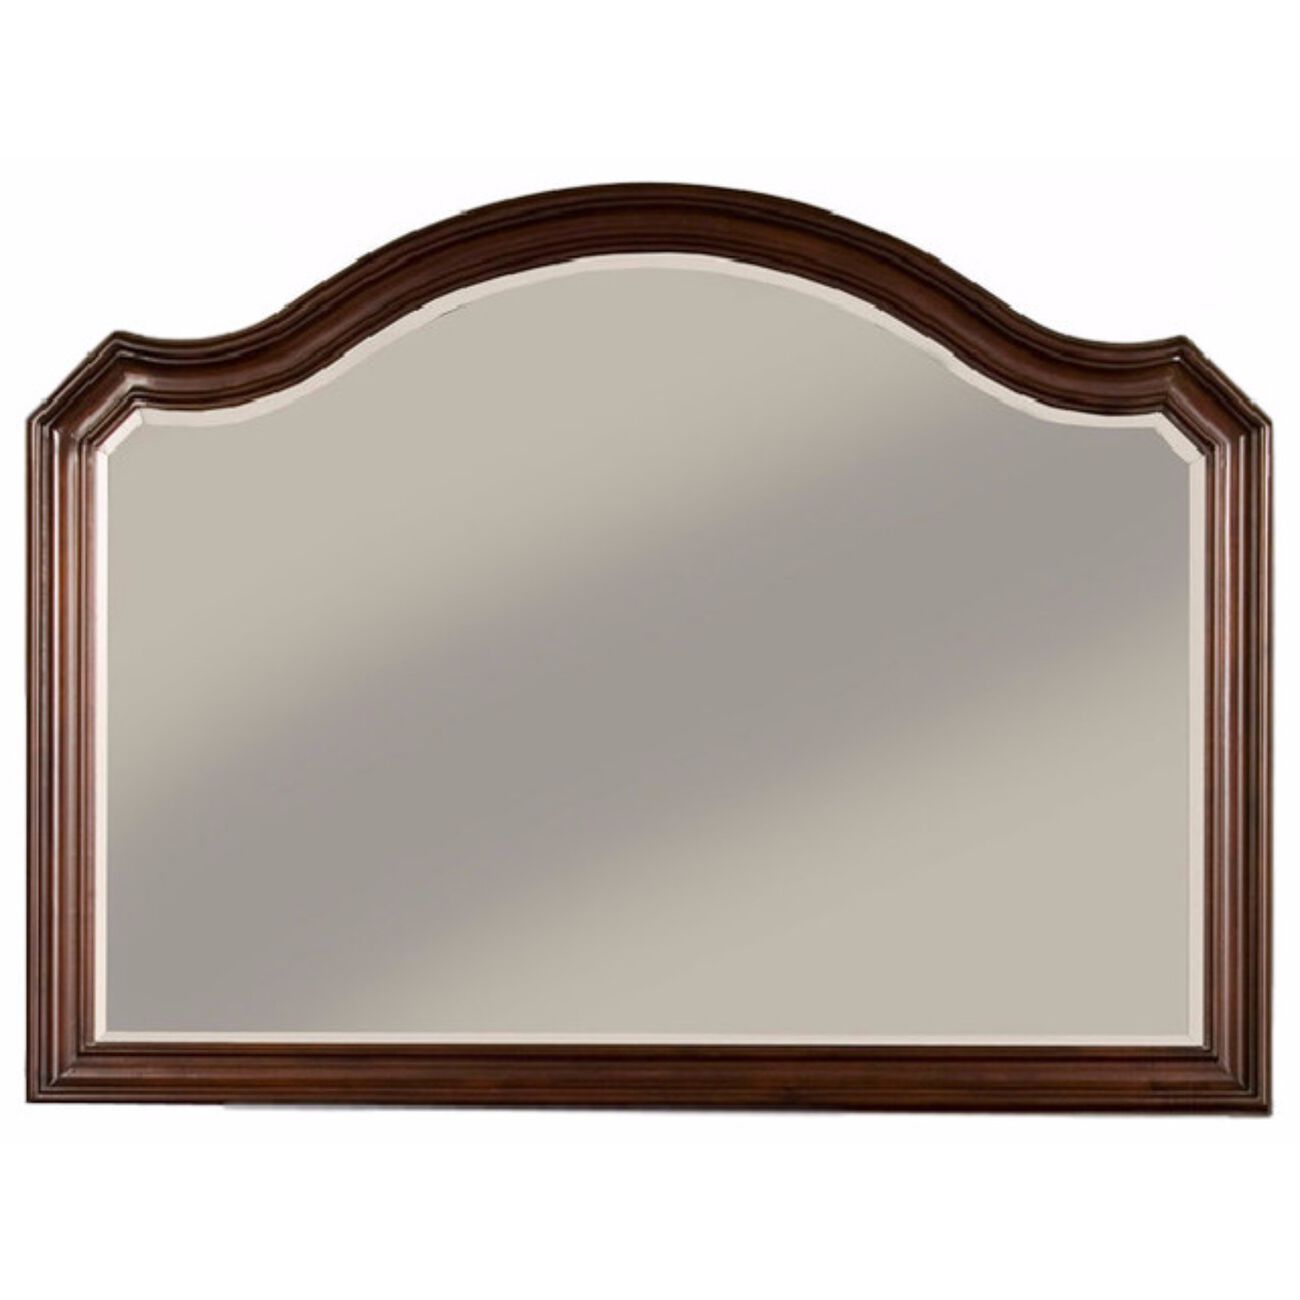 Arden Transitional Style Mirror , Brown Cherry